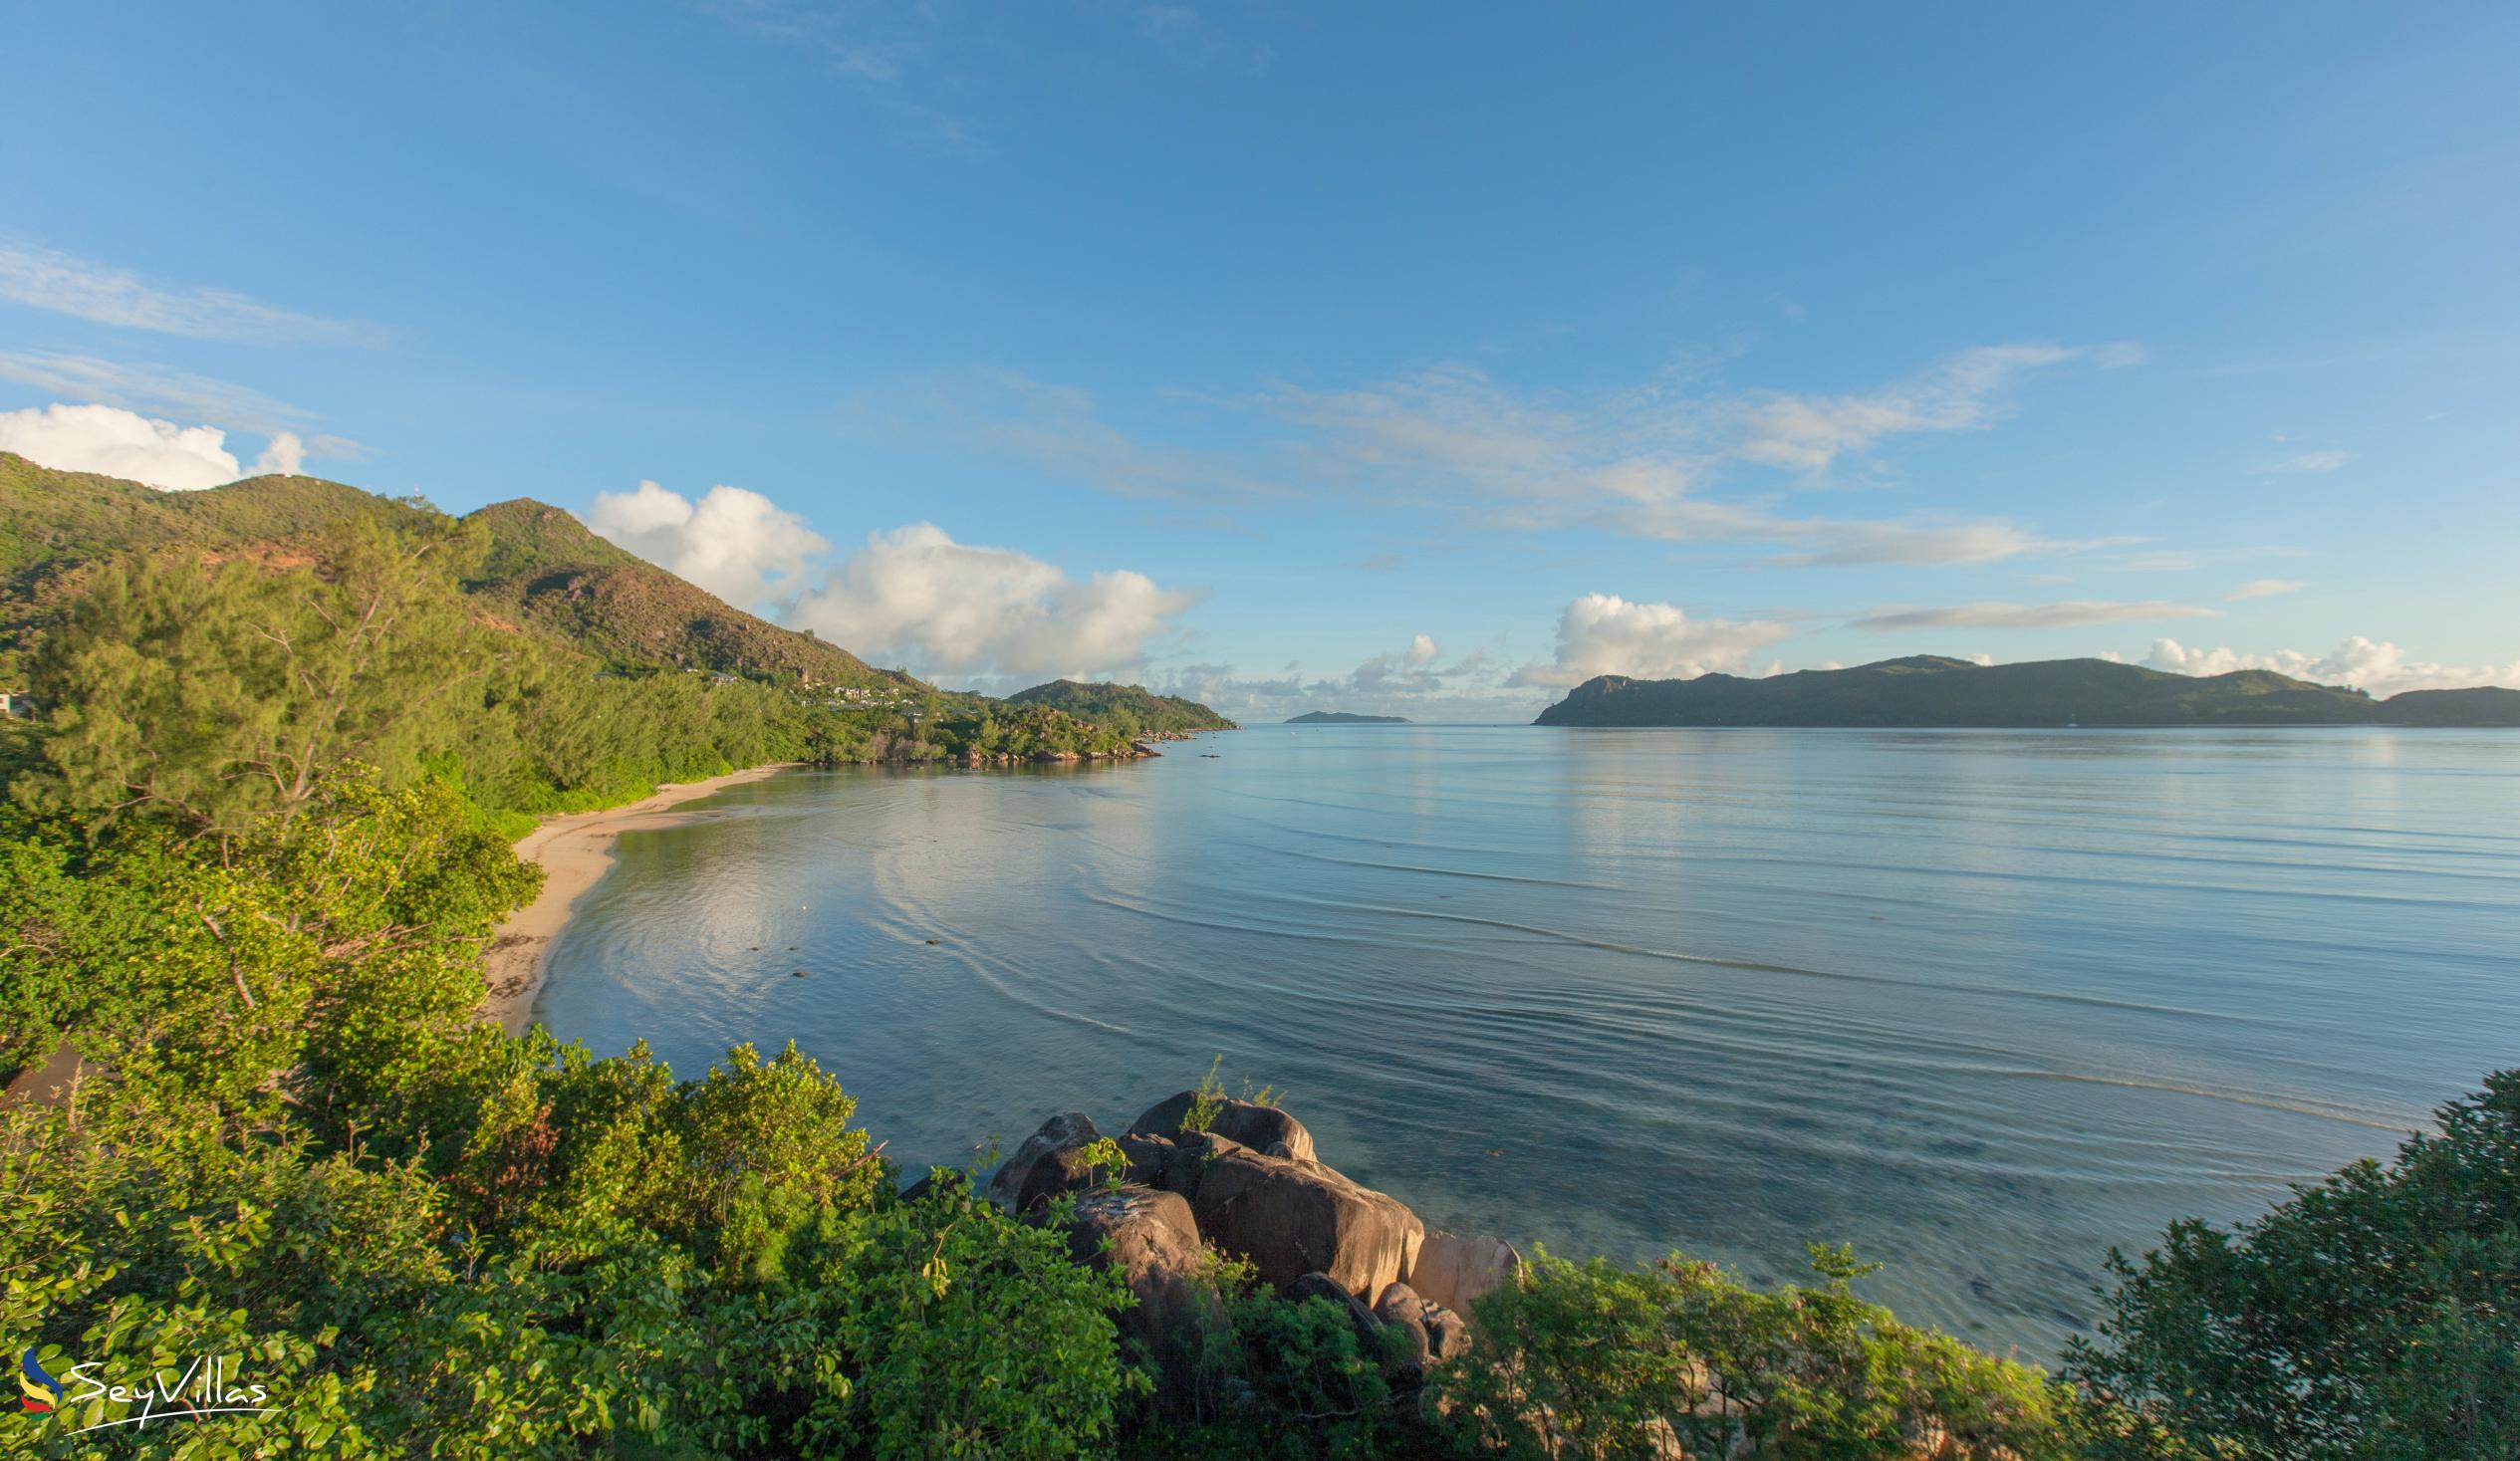 Photo 9: Anse Pasquière - Praslin (Seychelles)